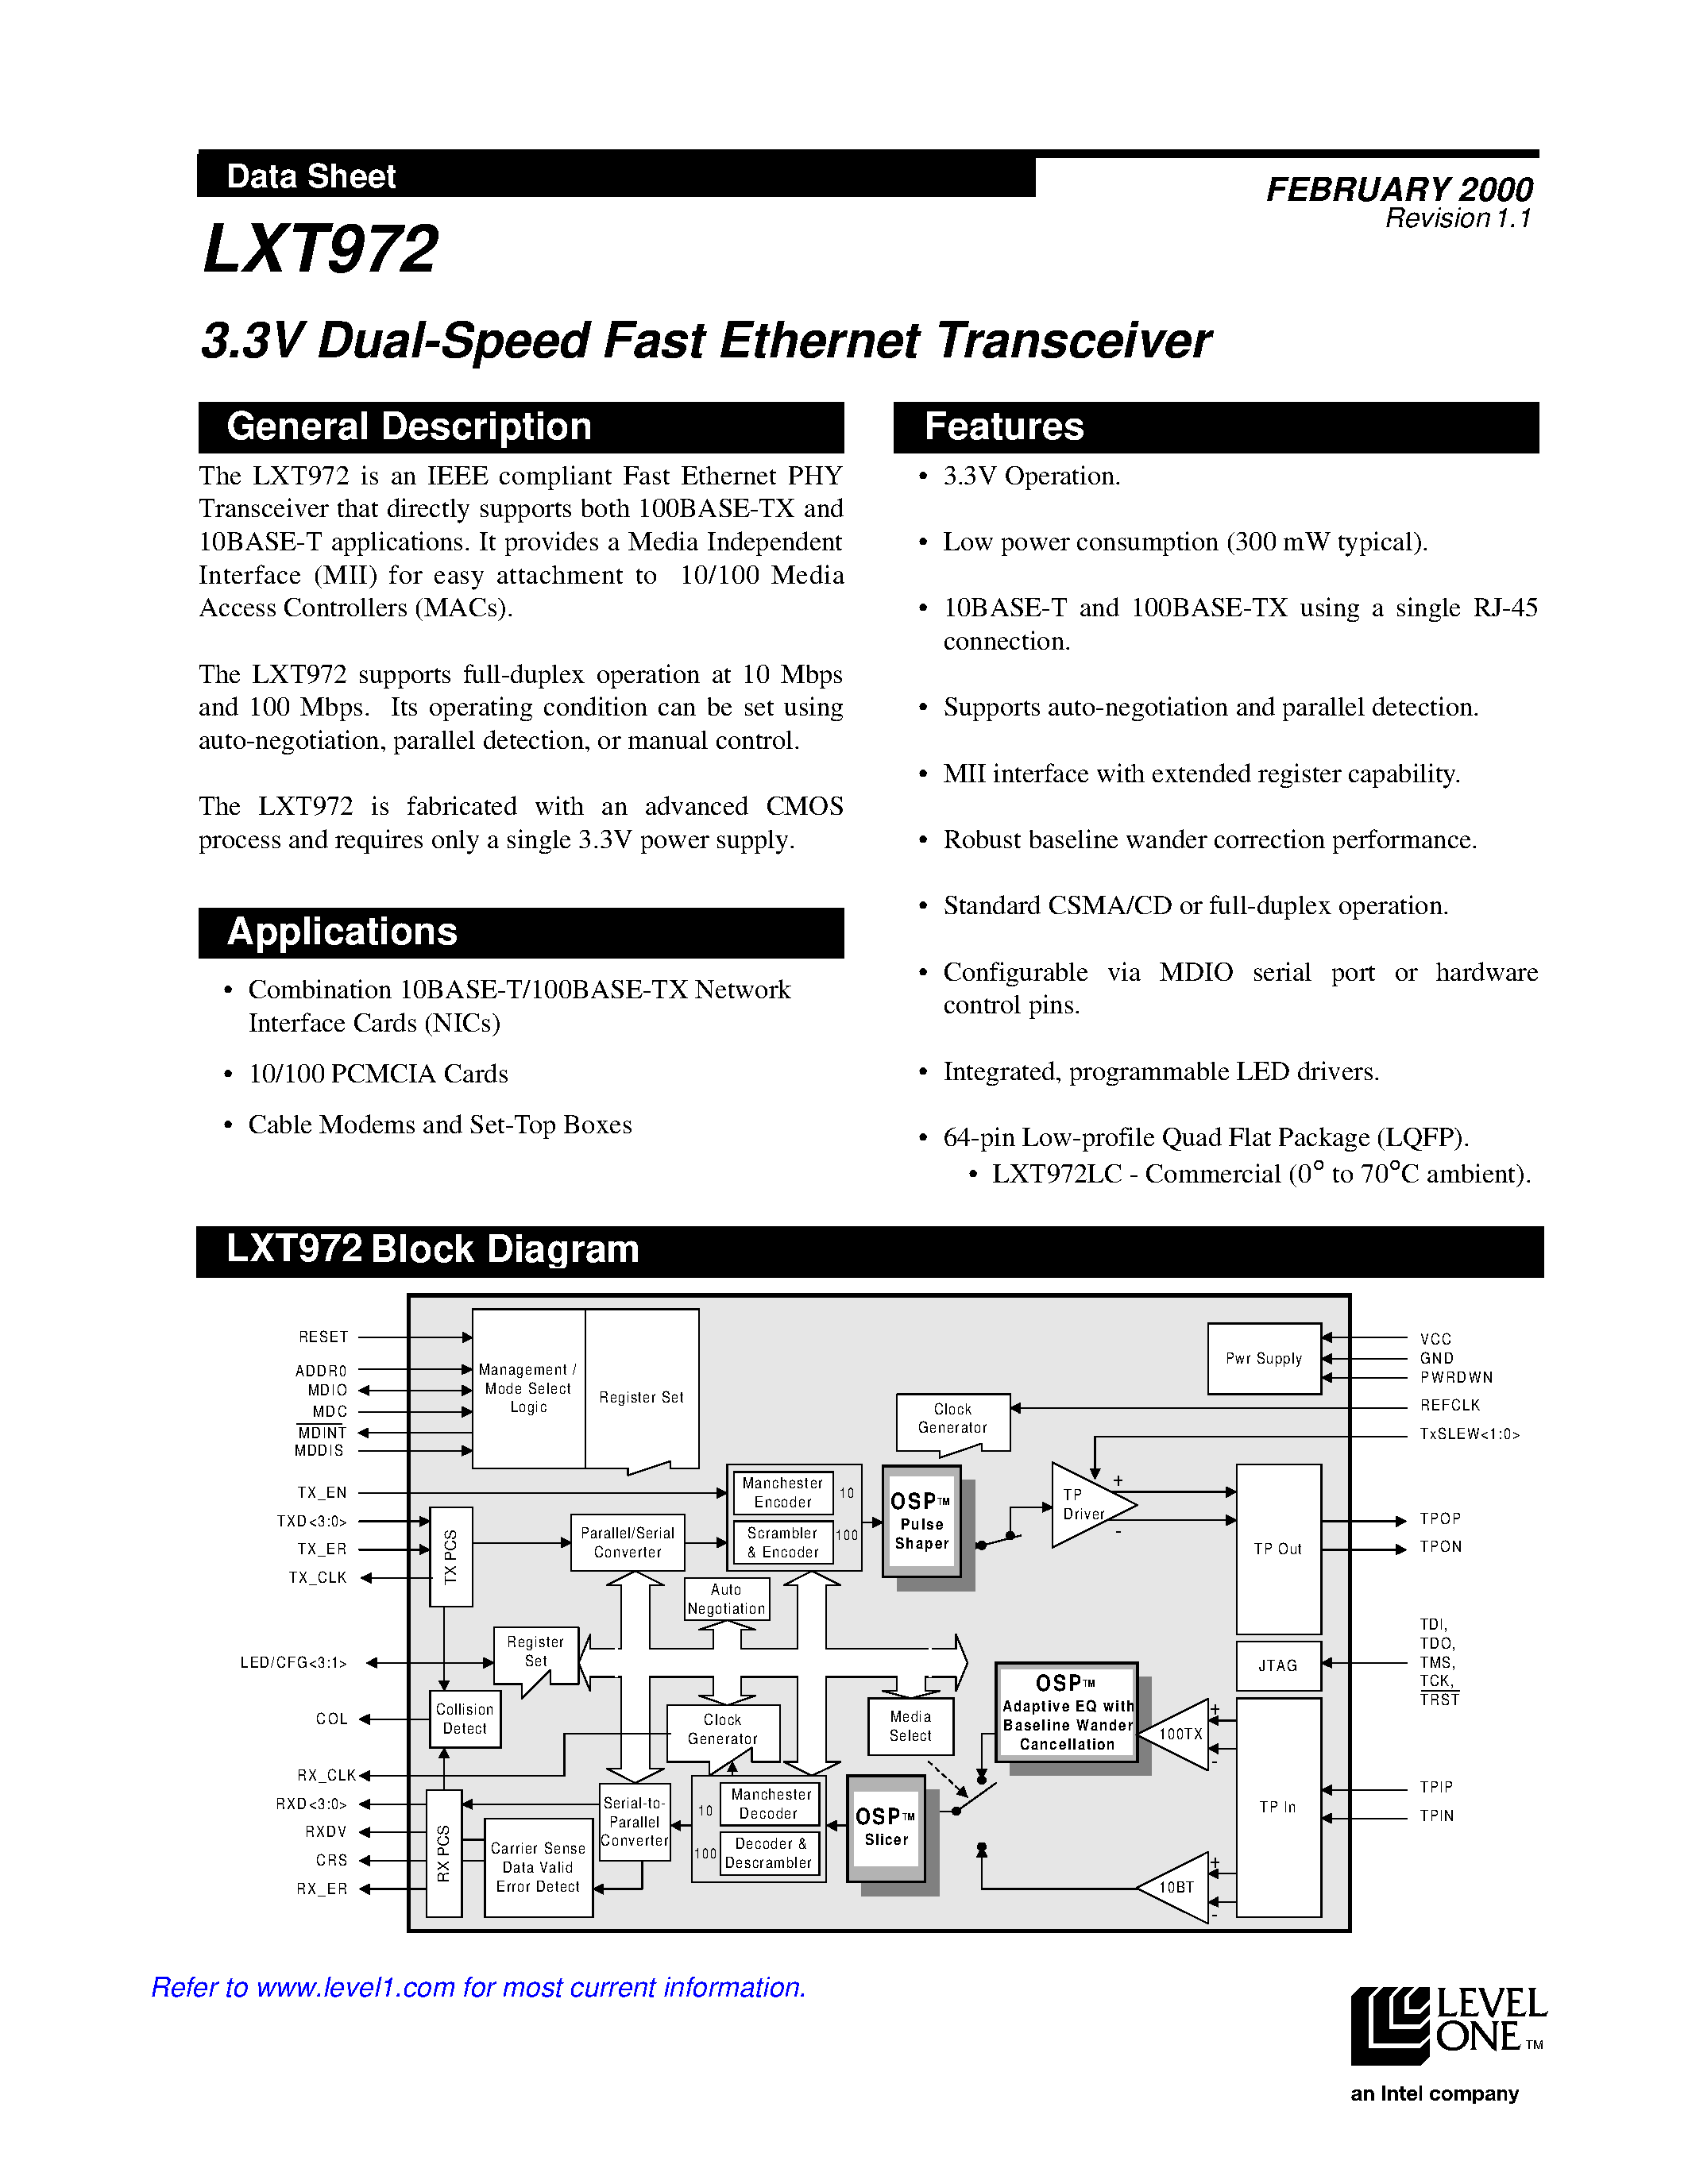 Datasheet LXT972 - 3.3V Dual-Speed Fast Ethernet Transceiver Datasheet page 1